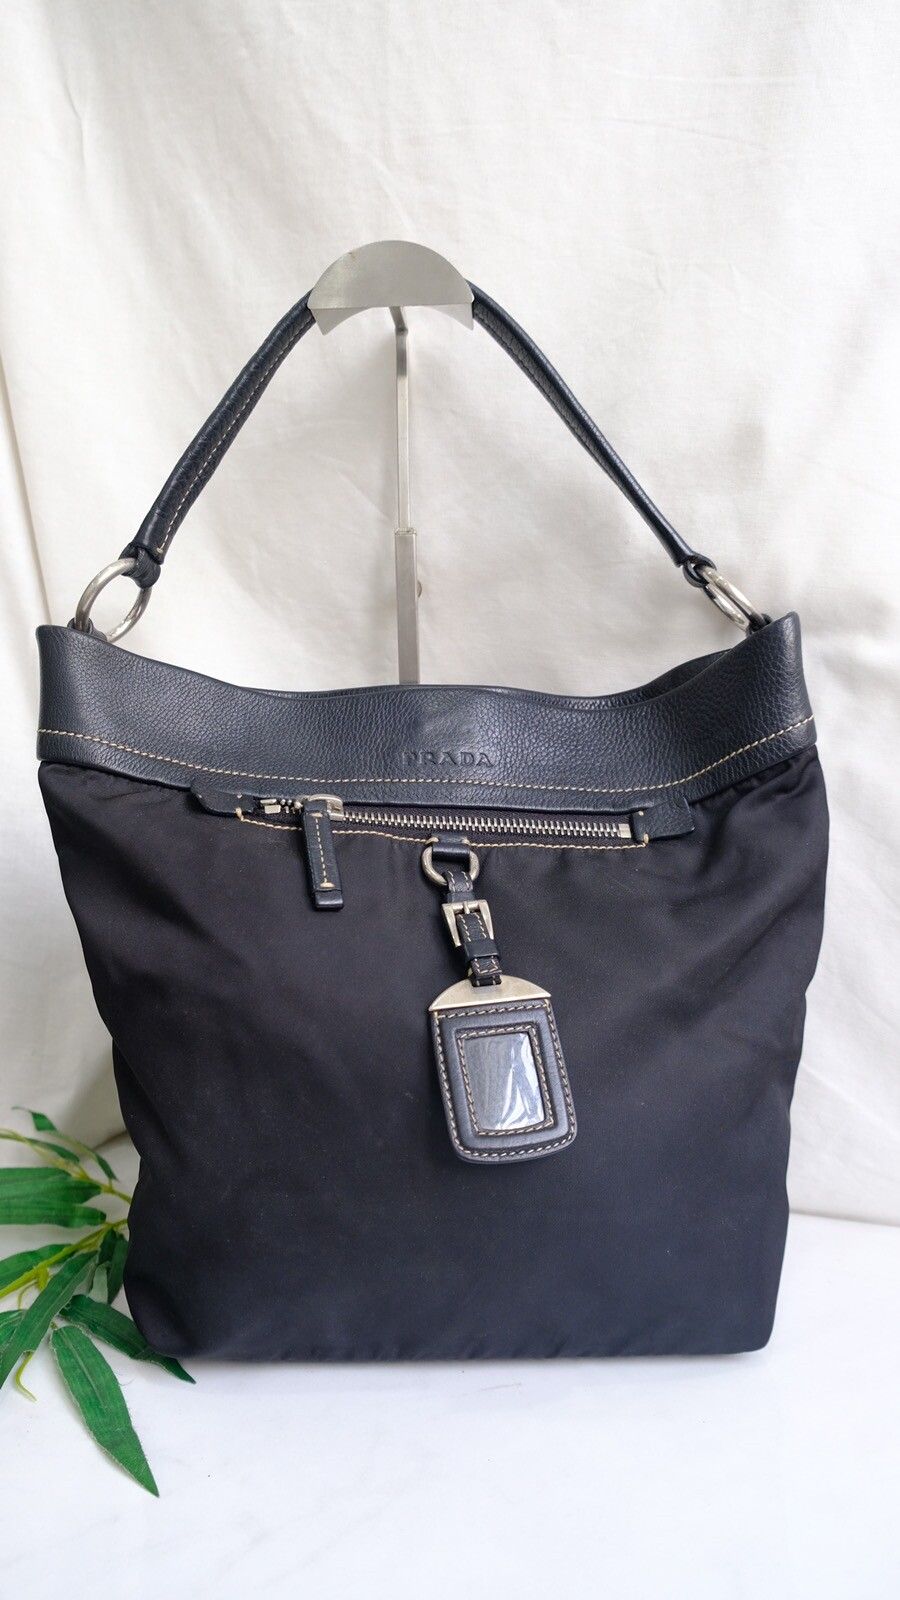 Authentic Prada black leather and nylon shoulder bag - 2